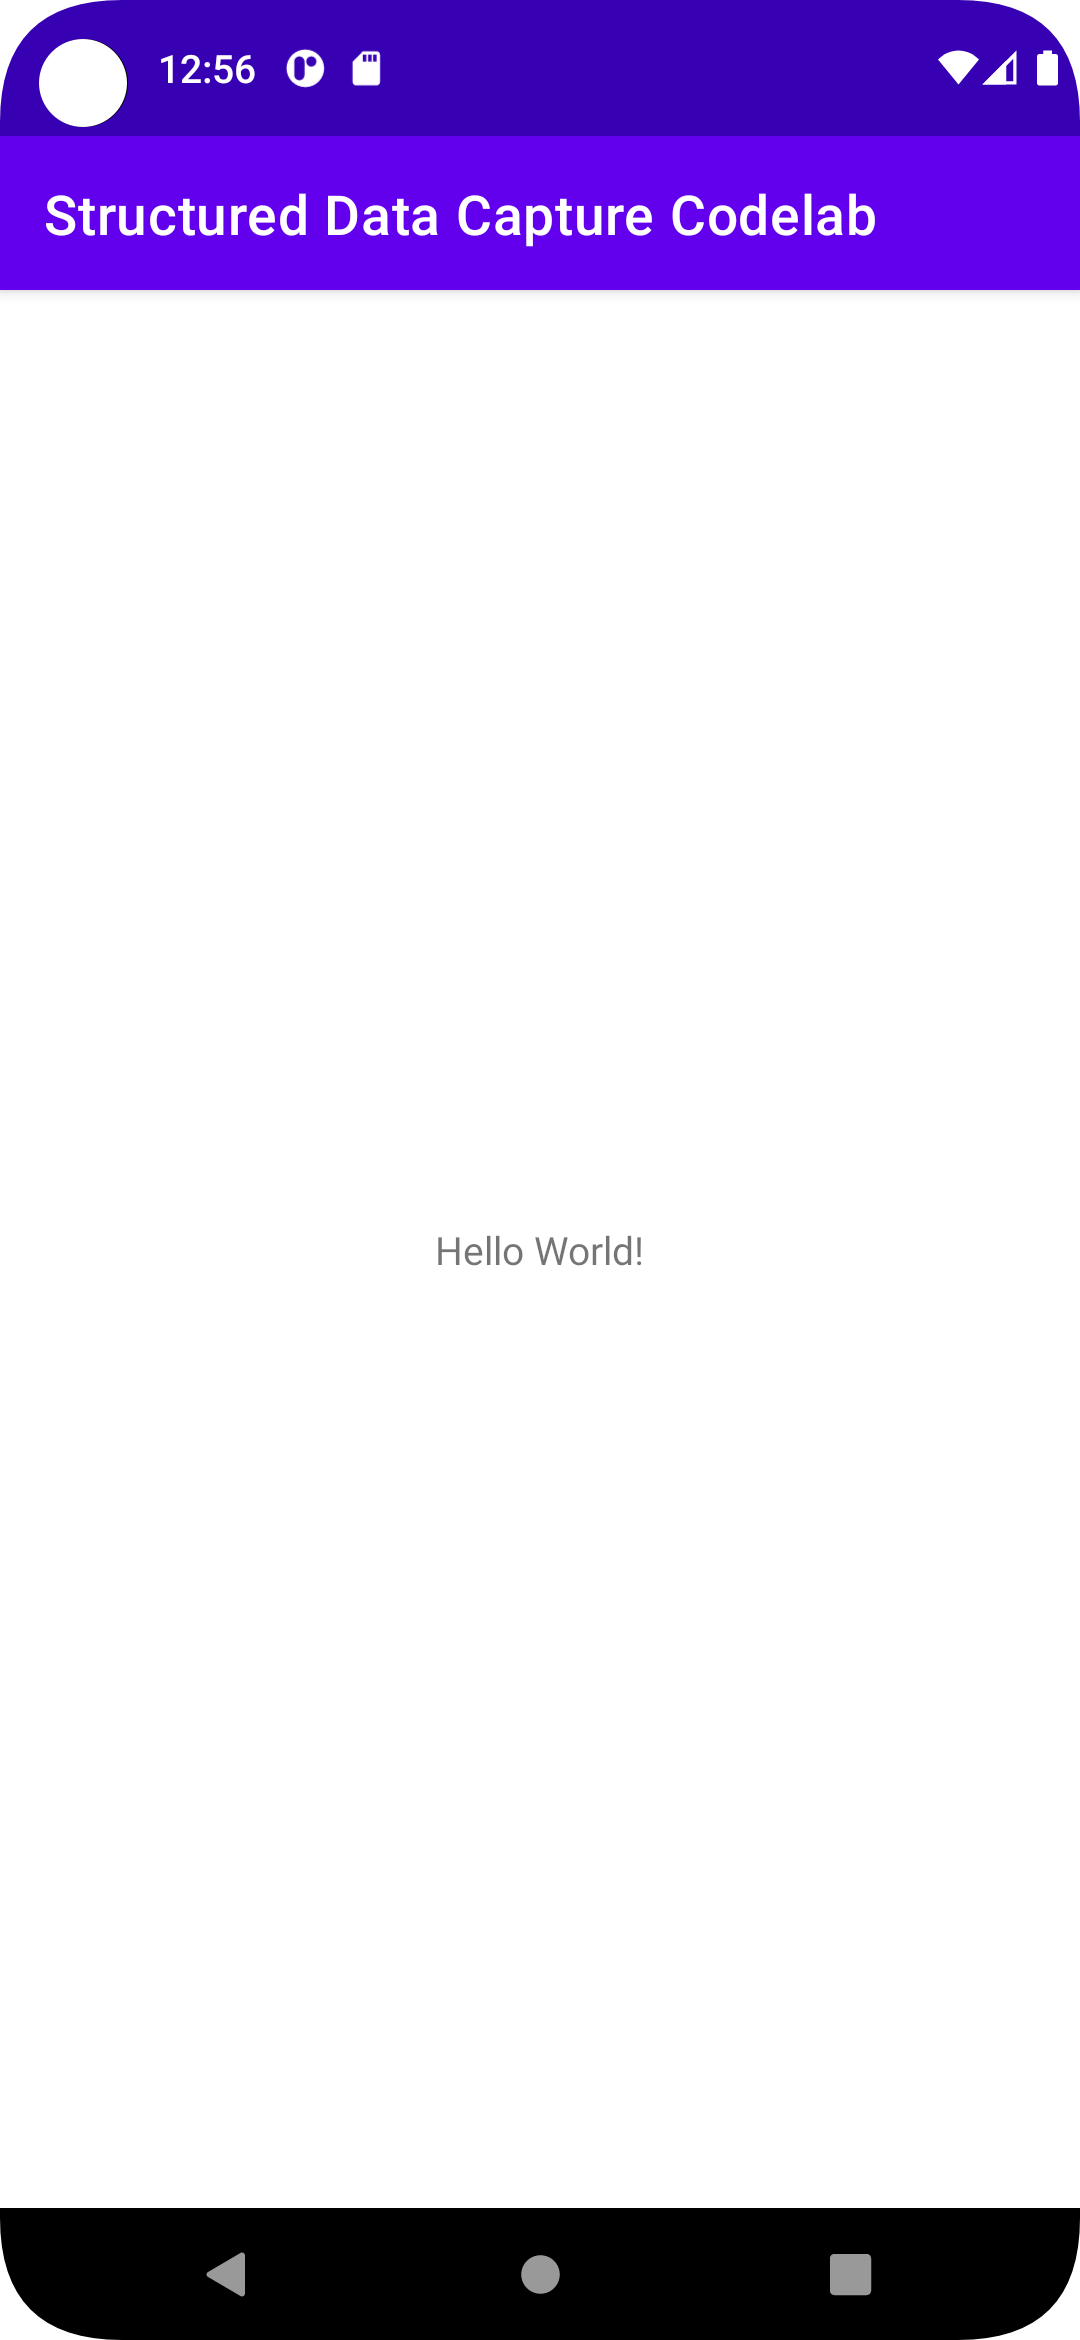 Application Hello World